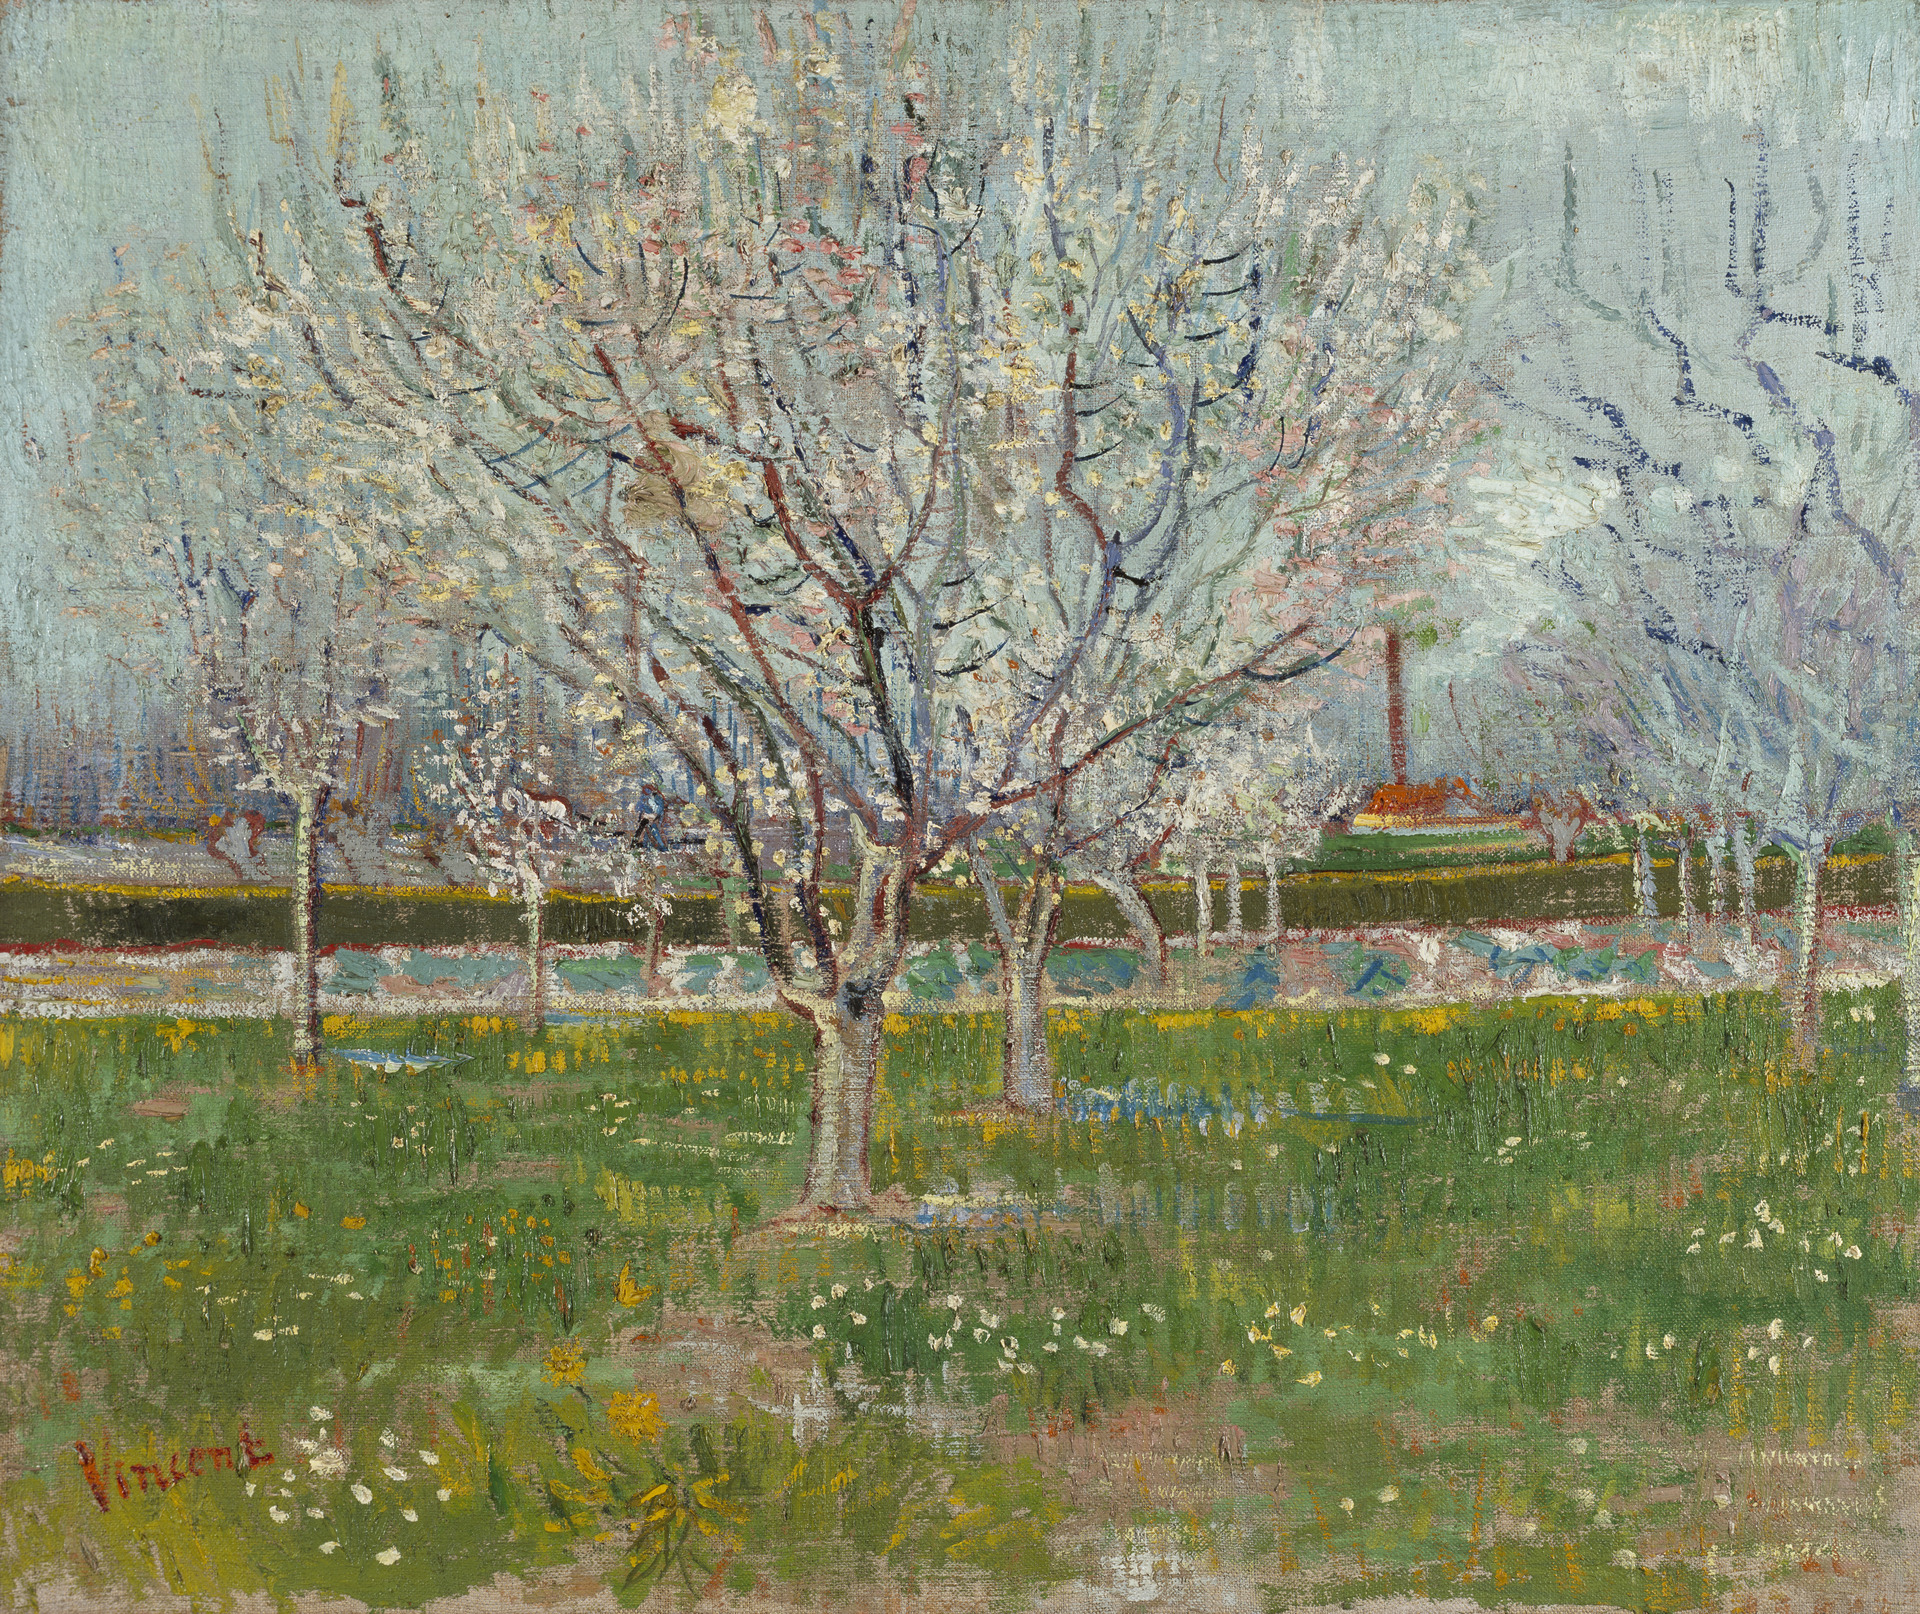 盛開的果園（李樹） by Vincent van Gogh - 1888 - 54.00 x 65.20 cm 